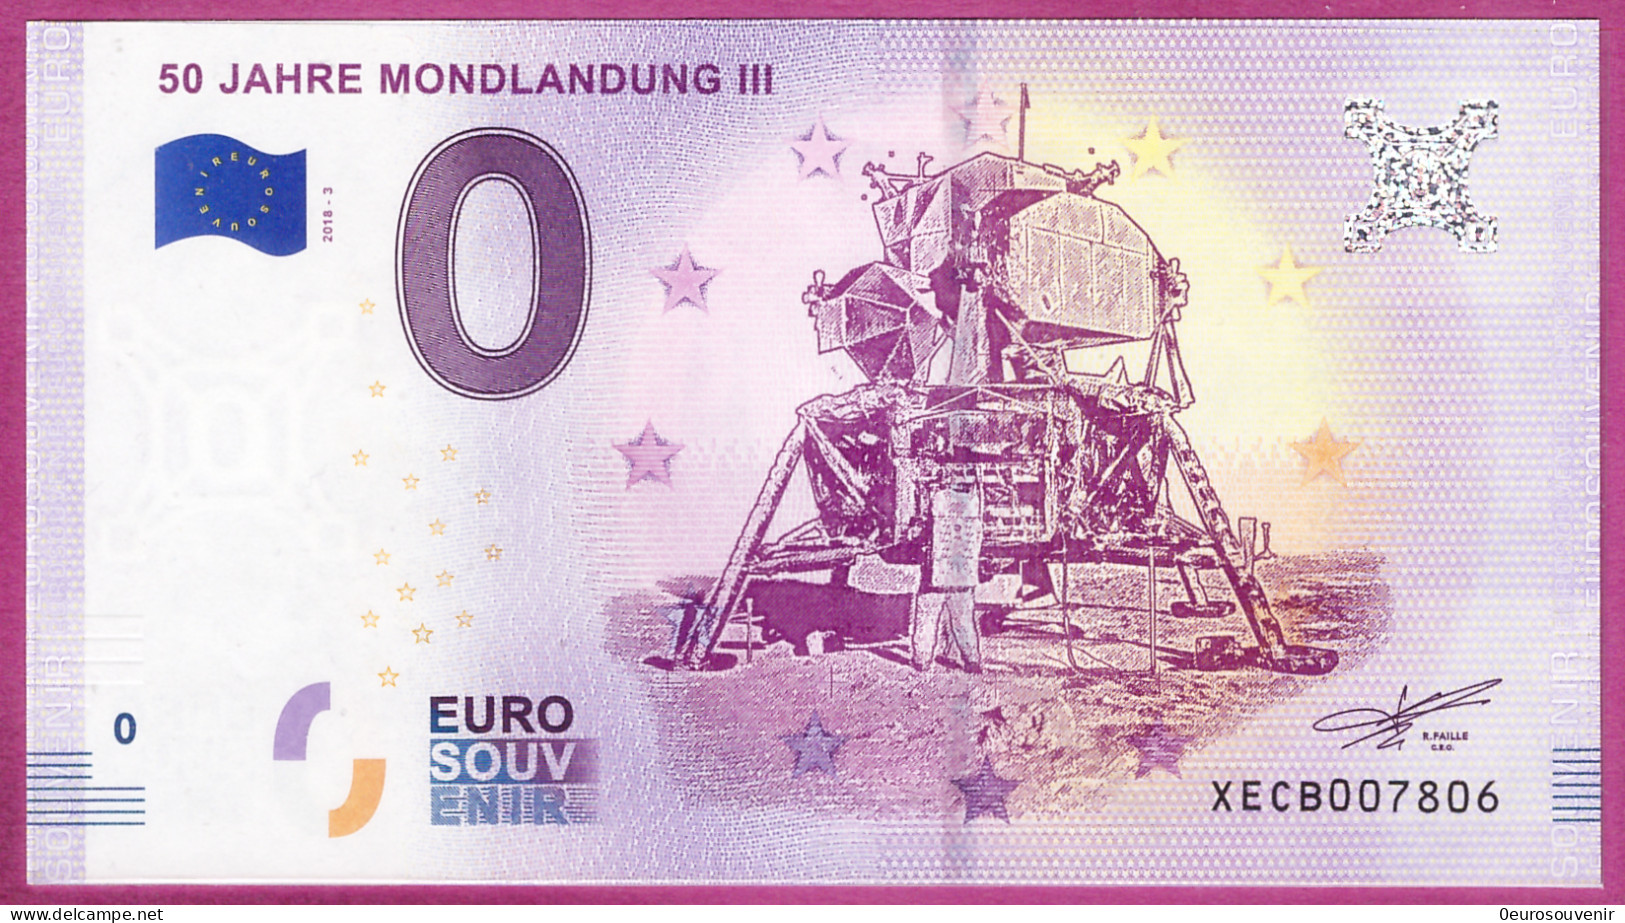 0-Euro XECB 2018-3 50 JAHRE MONDLANDUNG III  MONDLANDEFÄHRE - Privatentwürfe